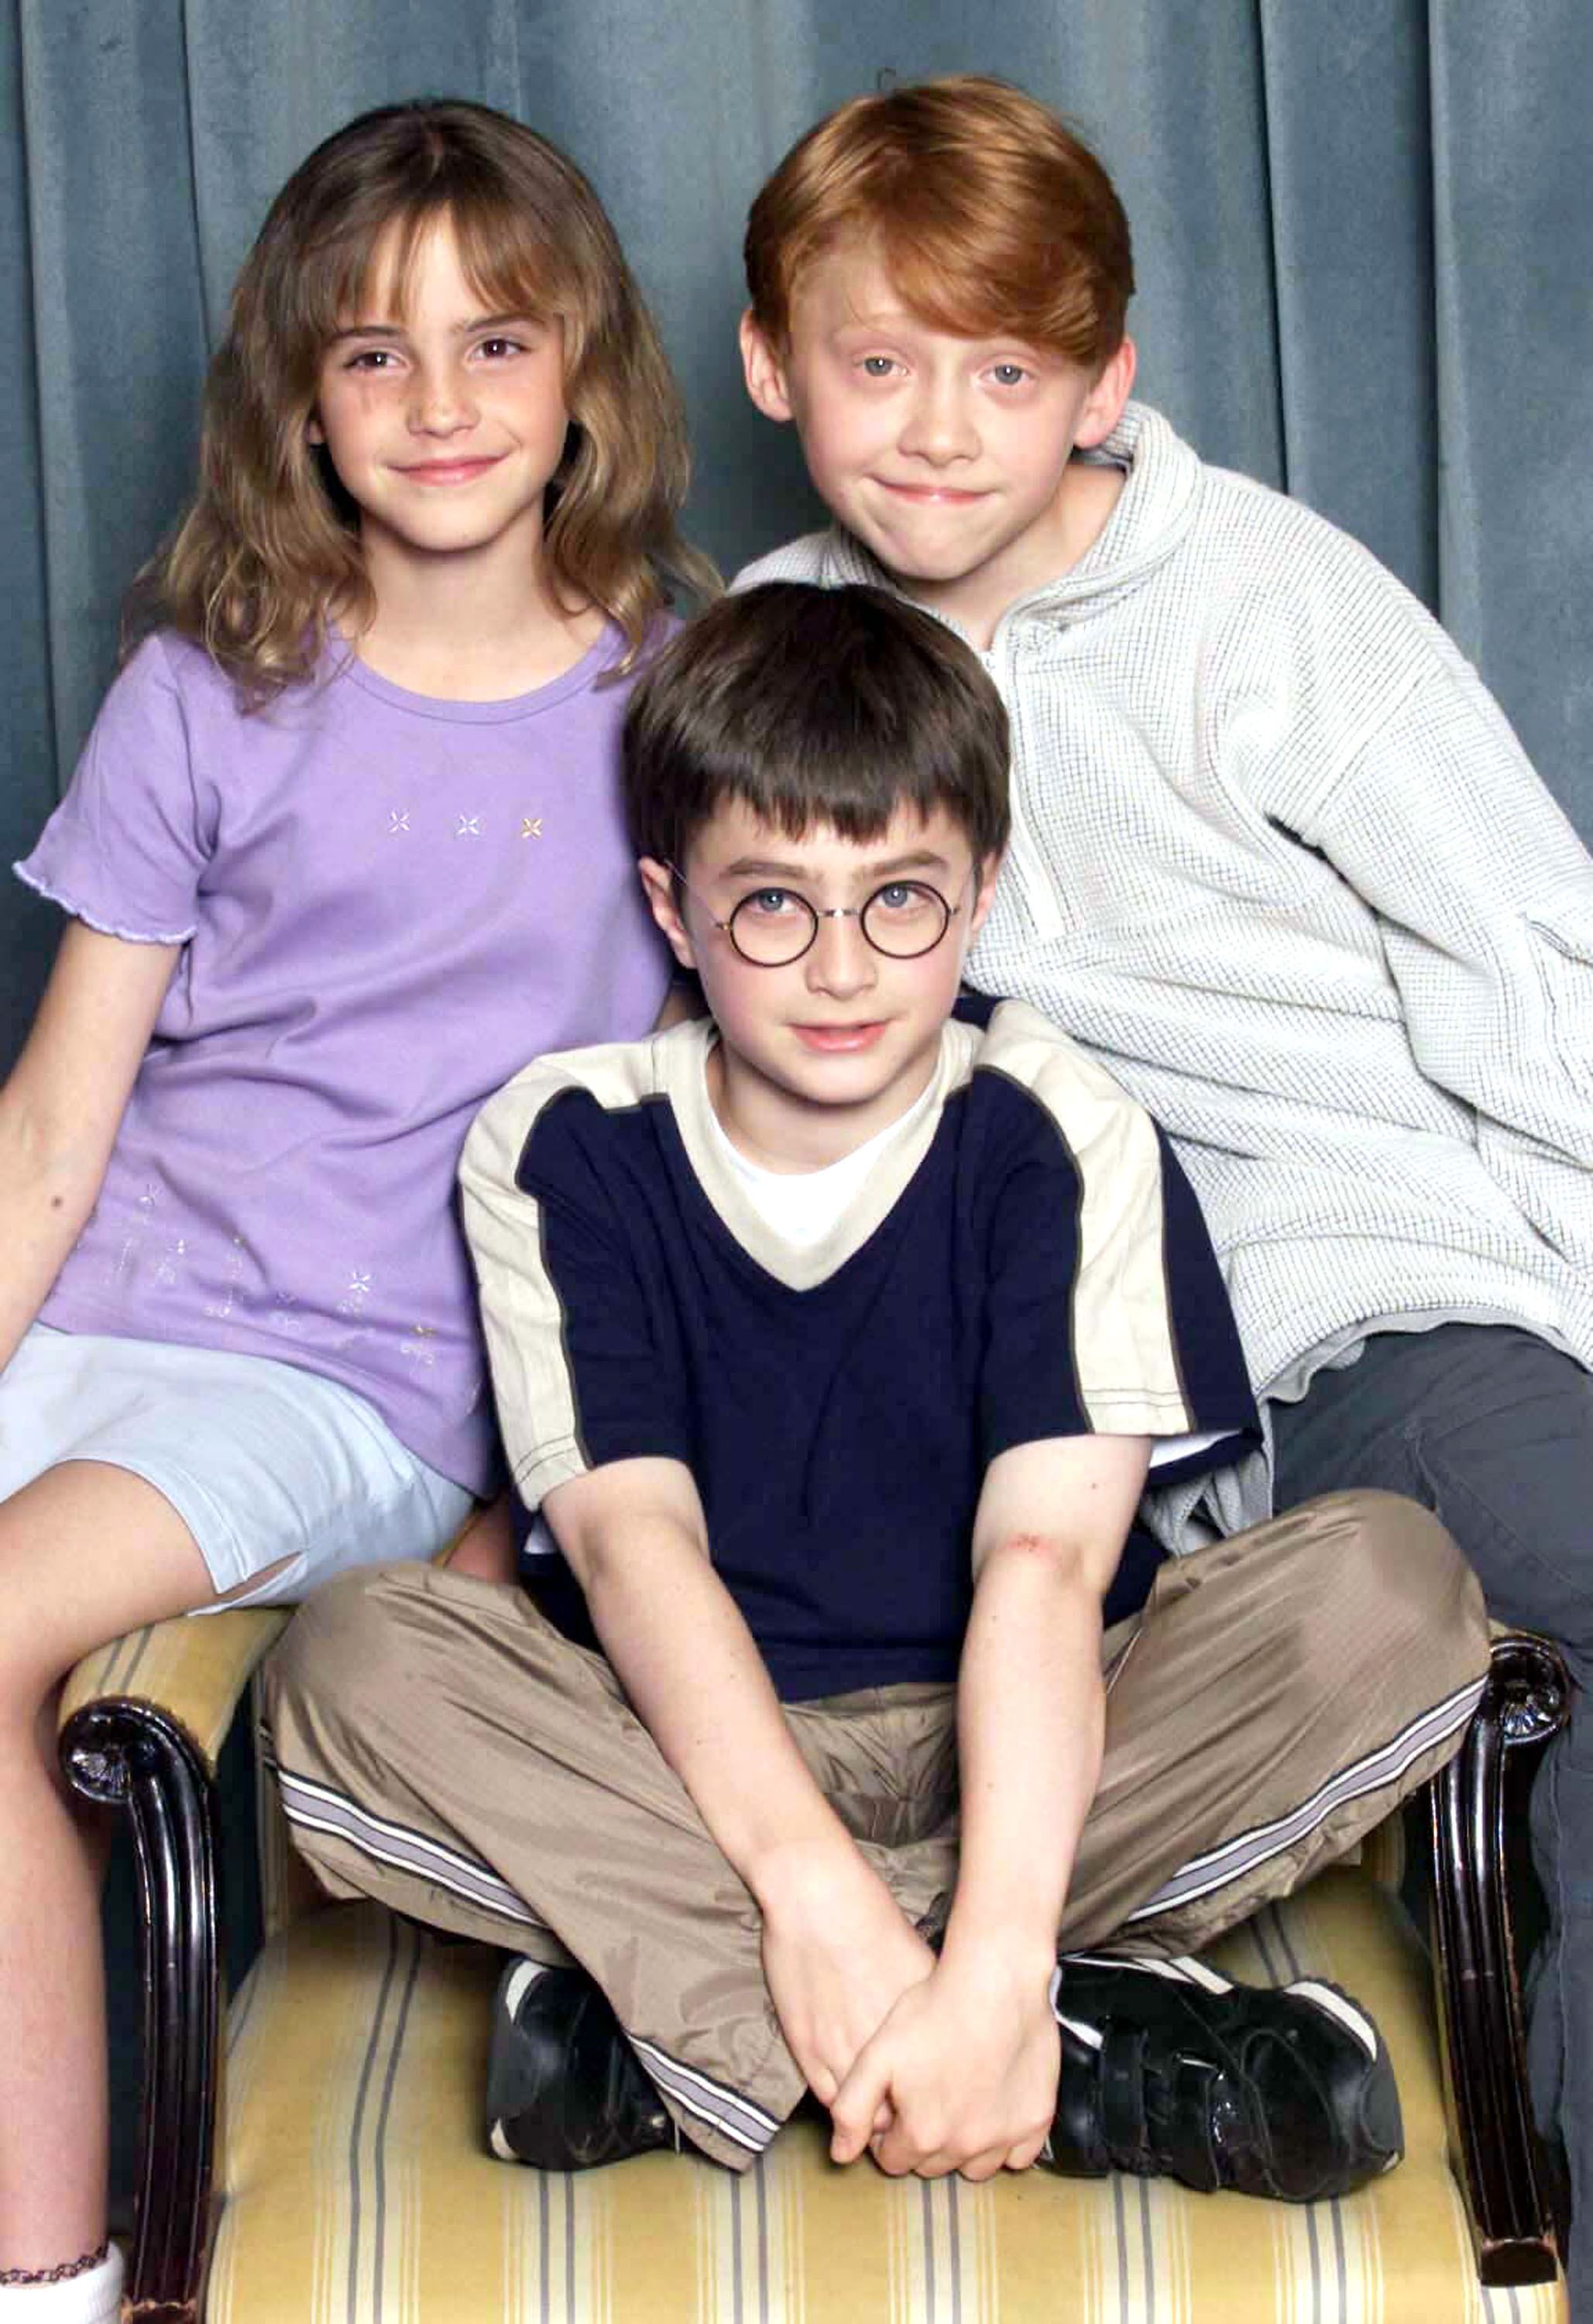 Emma Watson, Daniel Radcliffe y Rupert Grint en un photocall de "Harry Potter" en Londres, Inglaterra, el 23 de agosto de 2000. | Foto: Getty Images